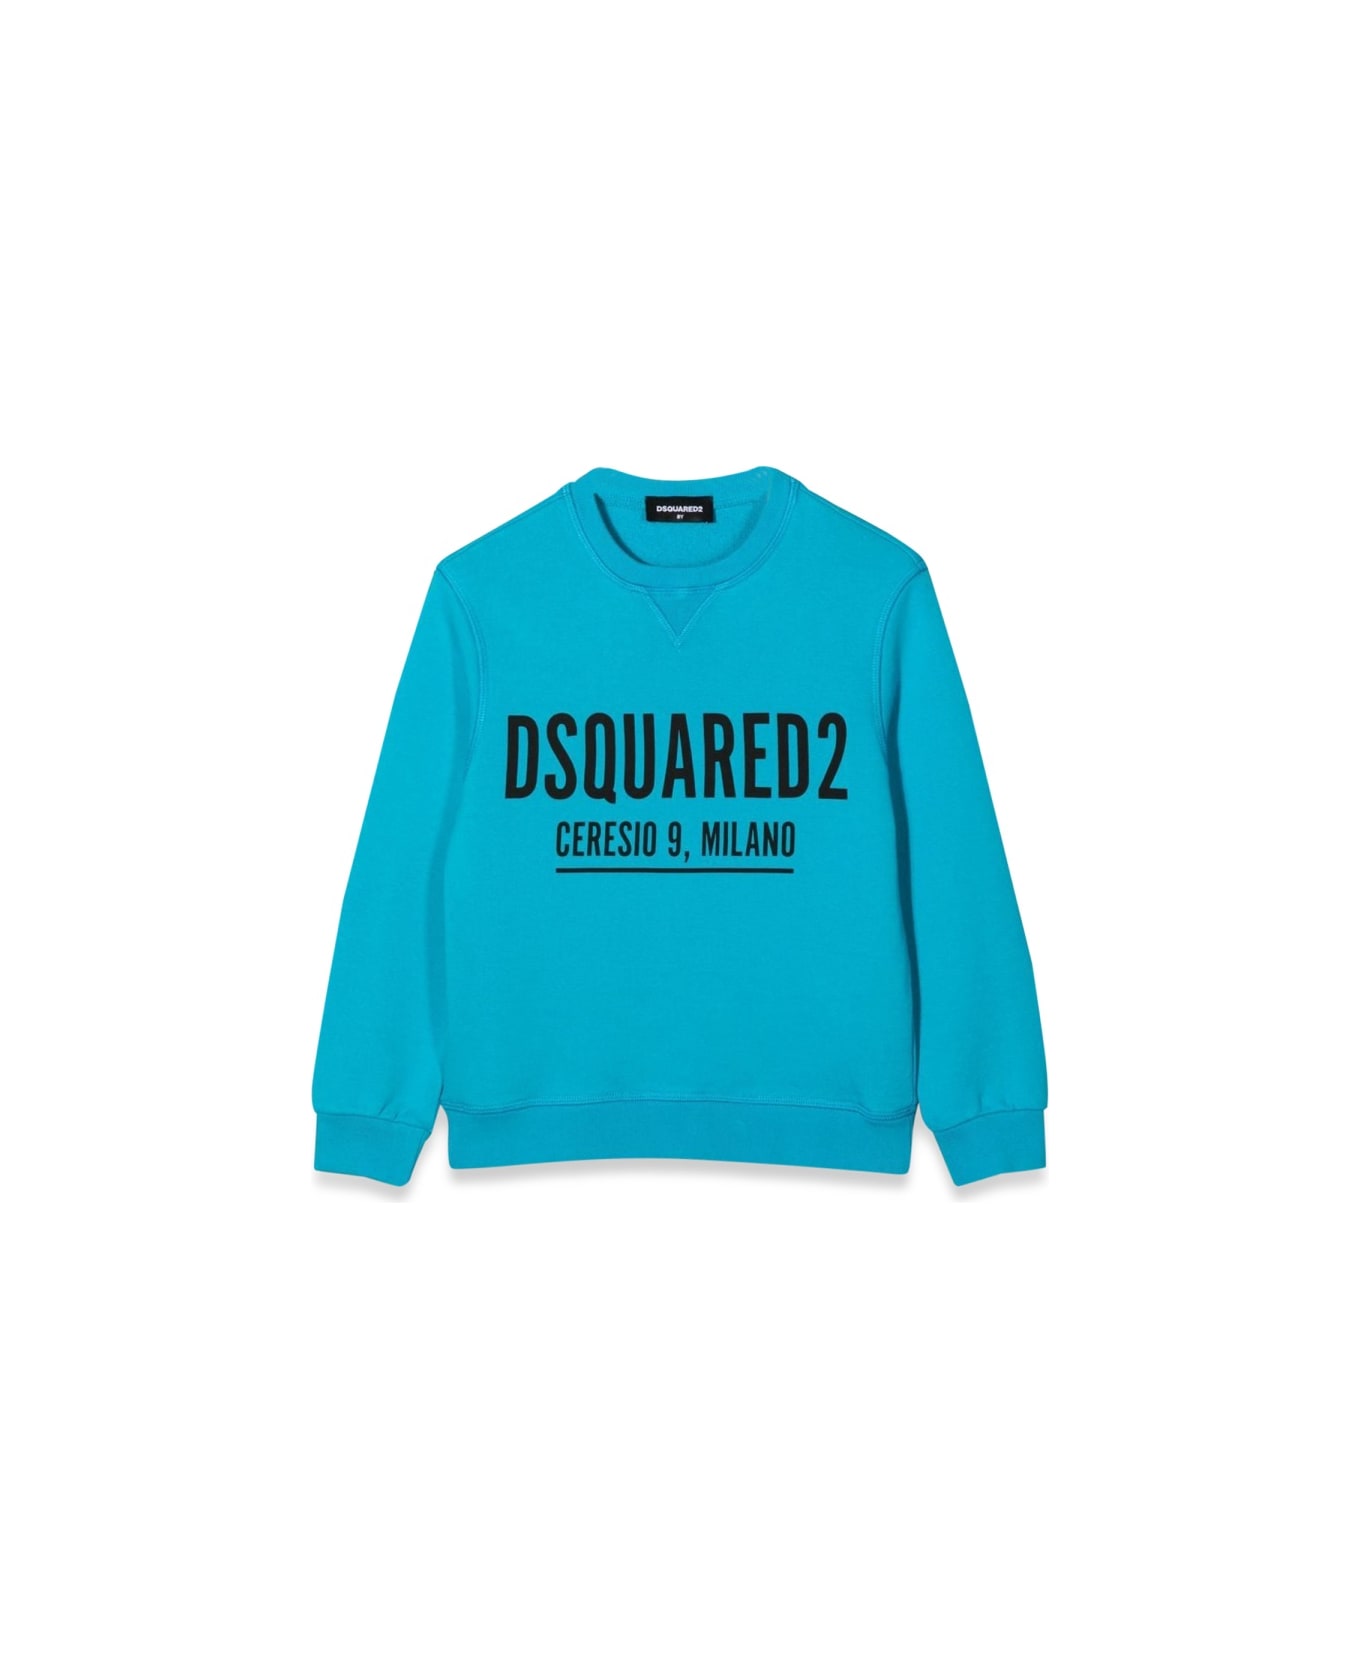 Dsquared2 Sweatshirt Written Ceresio - AZURE